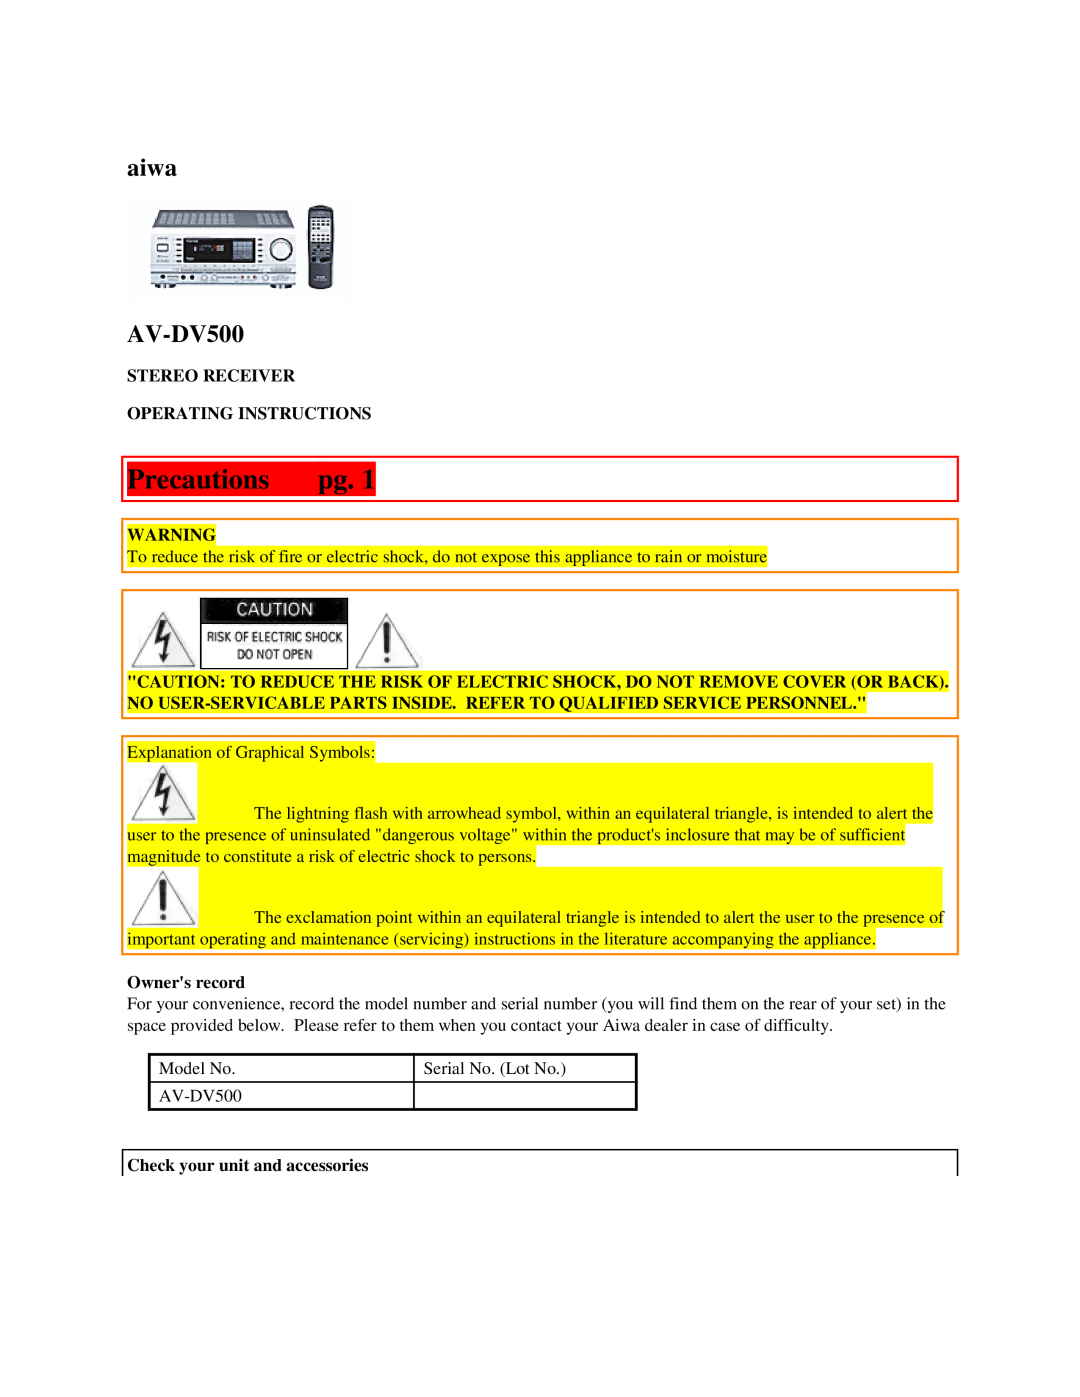 Aiwa manual Precautions, aiwa AV-DV500, Stereo Receiver Operating Instructions, Owners record 